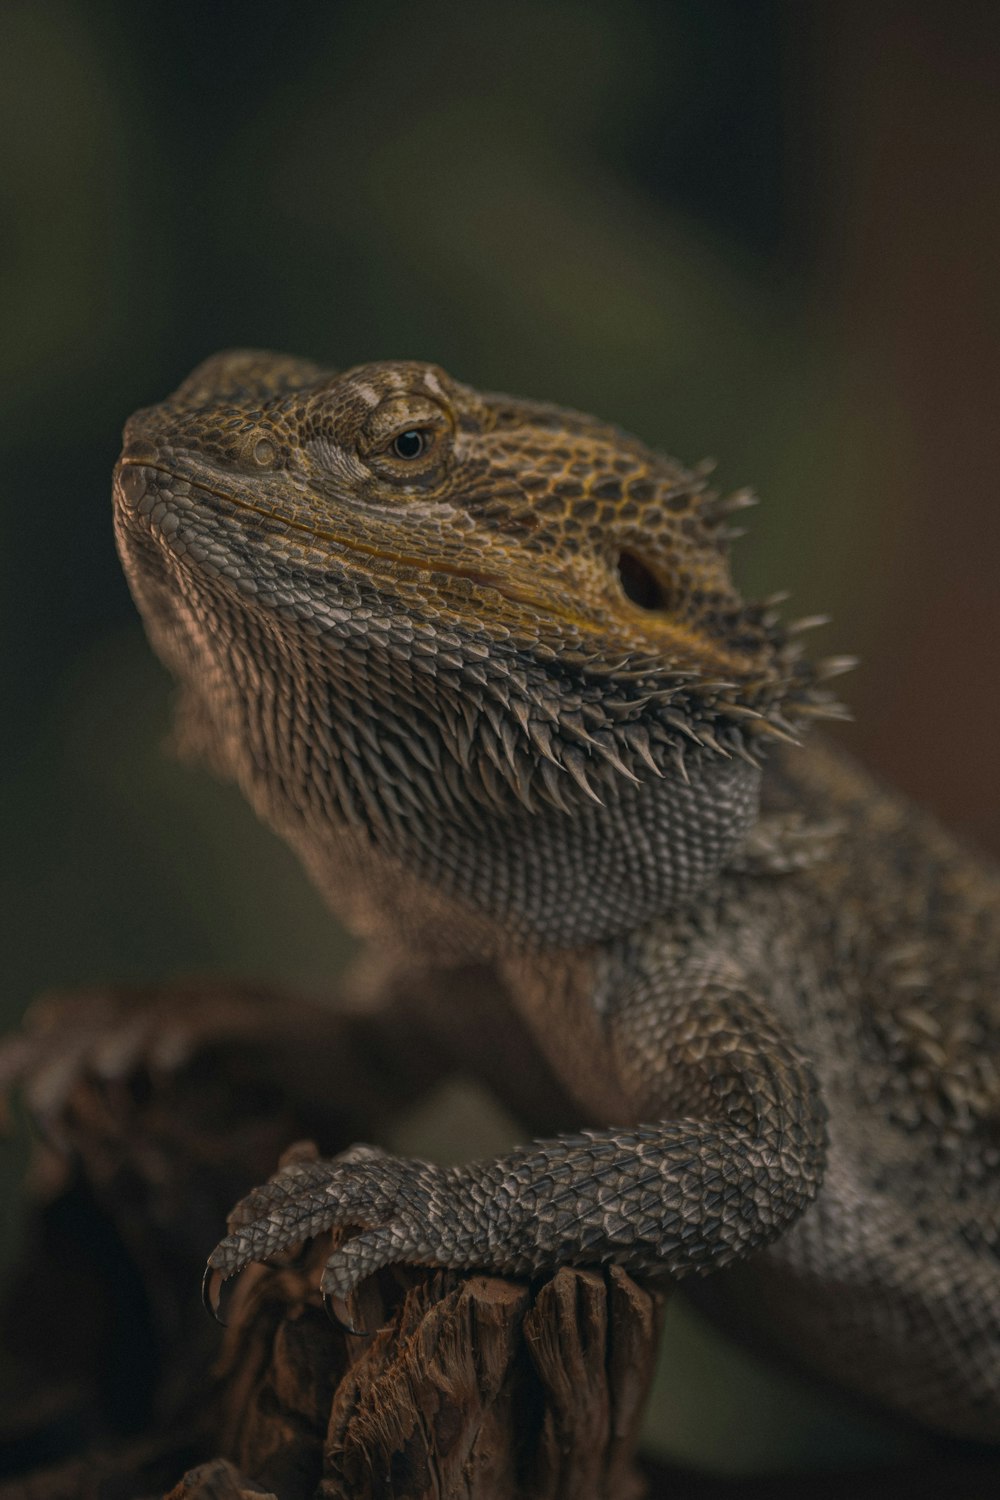 a close up of a lizard on a tree stump